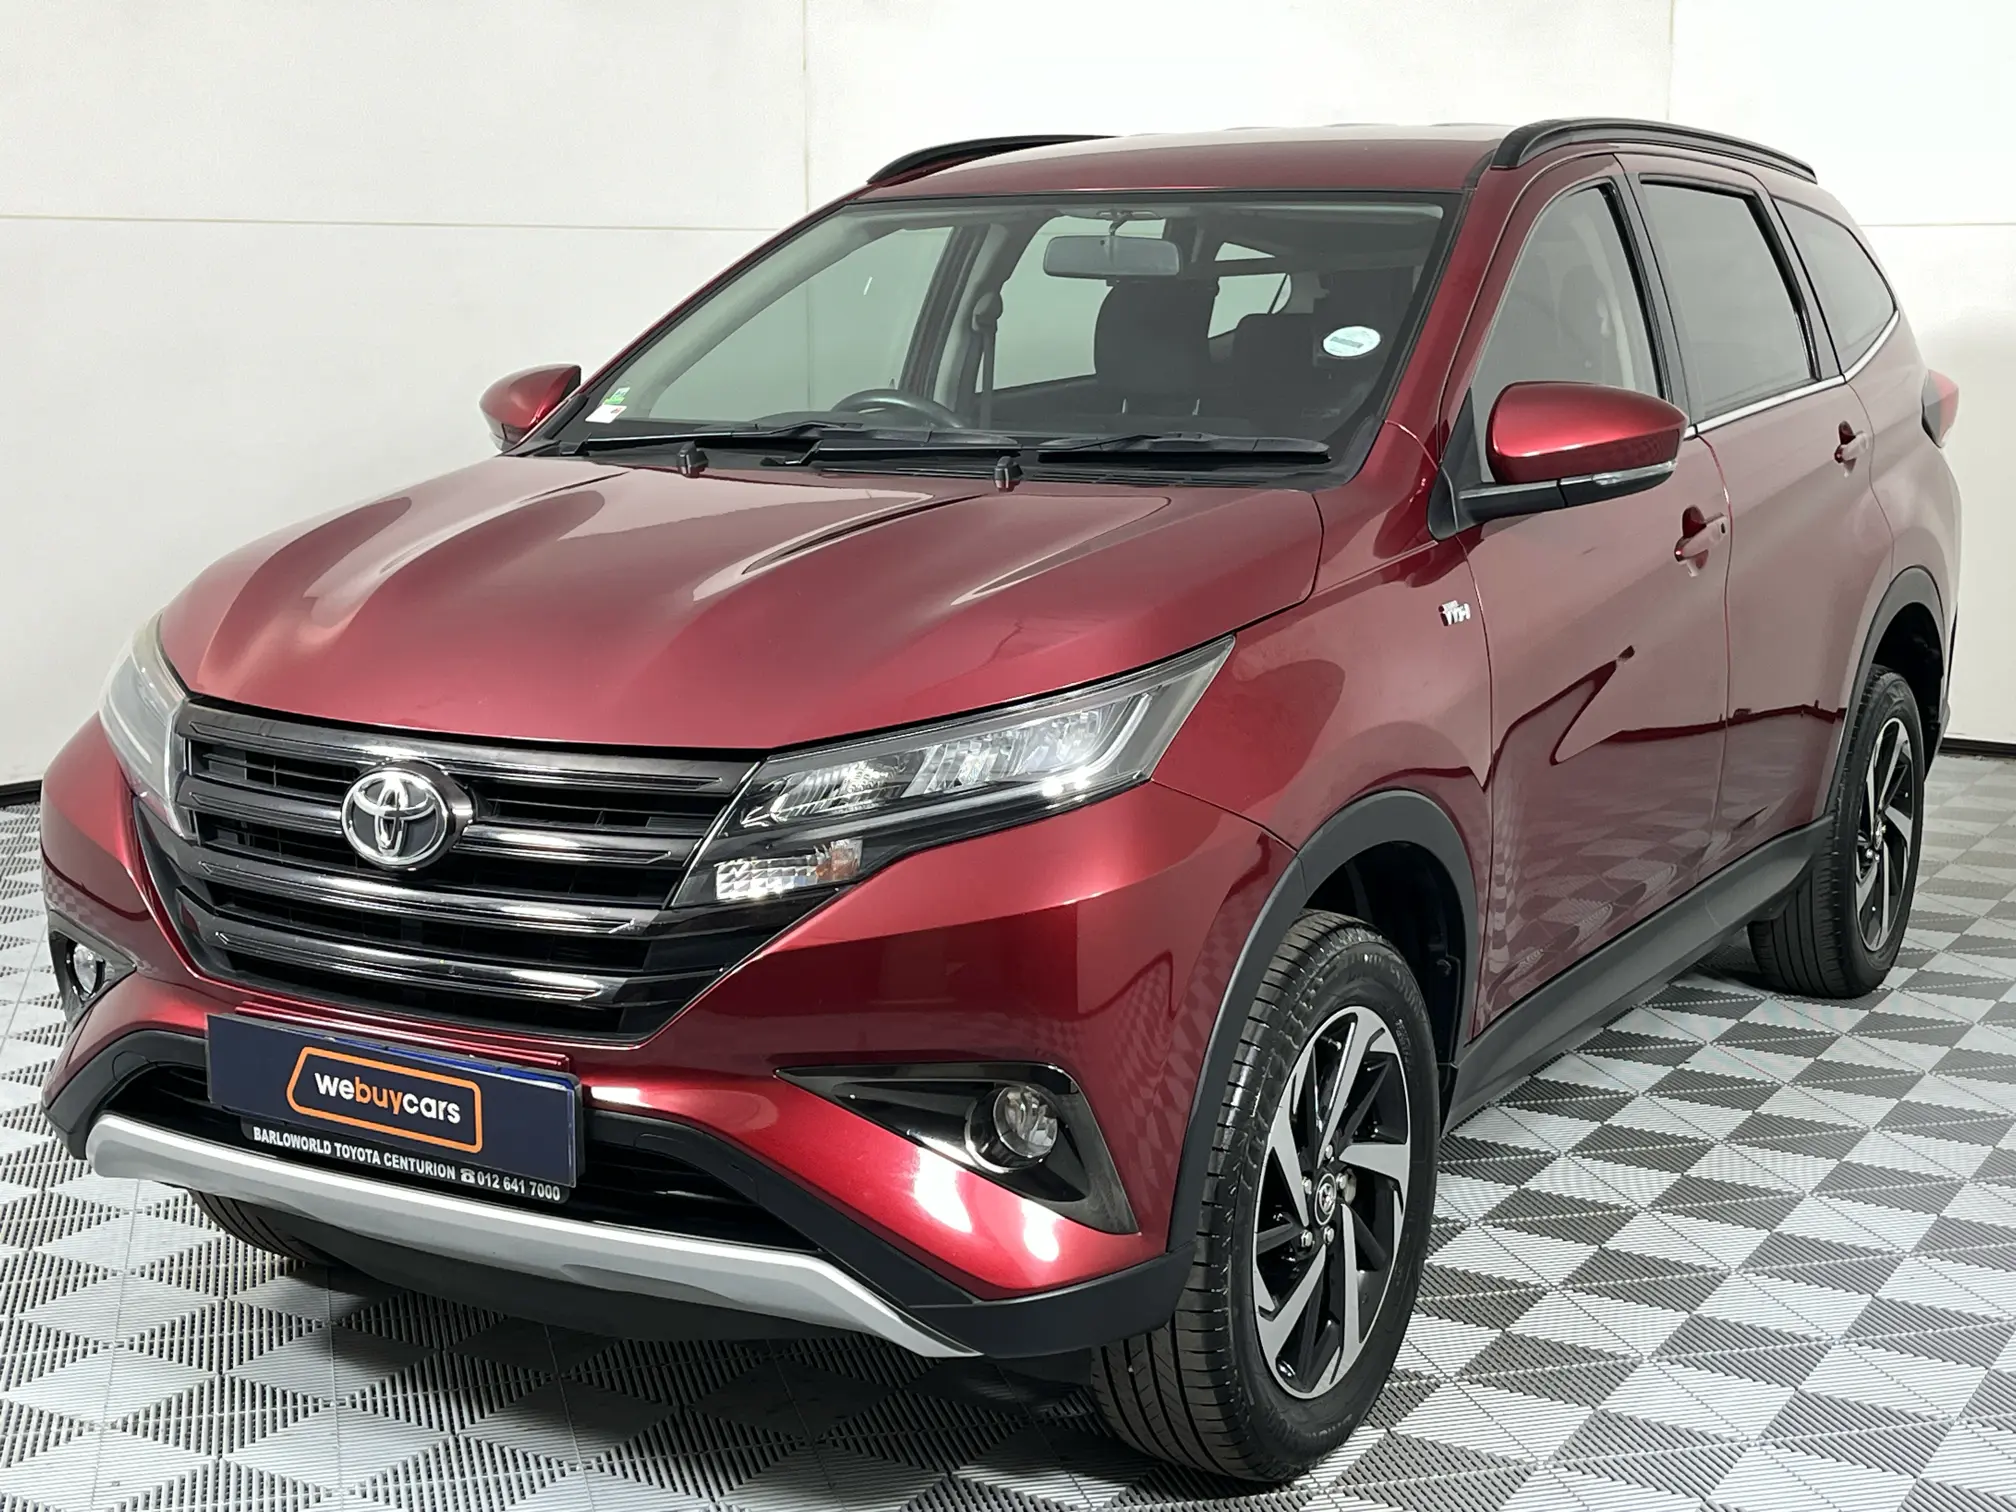 2019 Toyota Rush 1.5 Auto